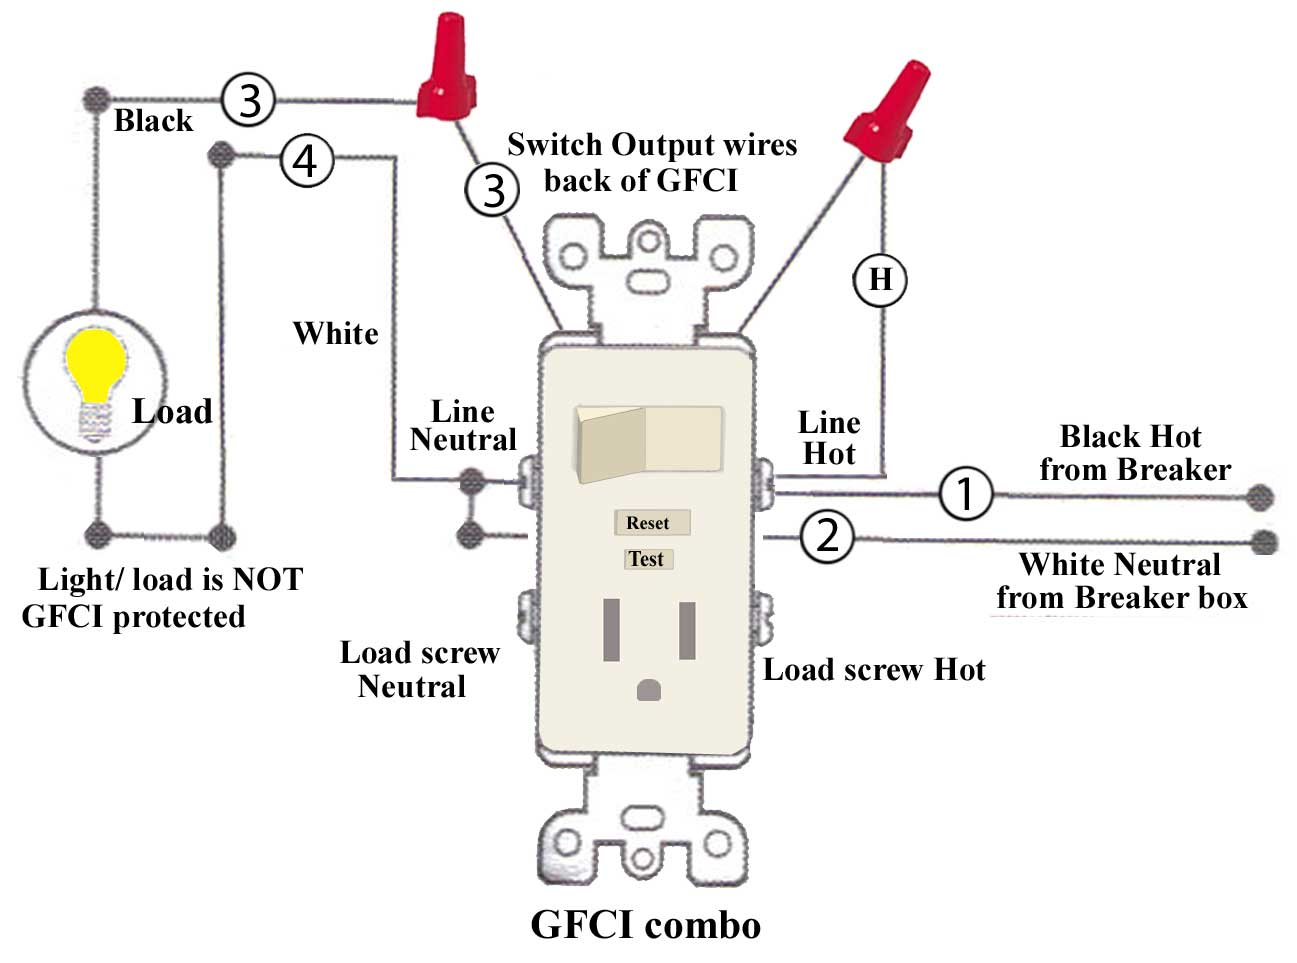 Phone Line Wiring Diagram Wiring Diagram Switch Schematic Combo Wiring Diagram Srconds